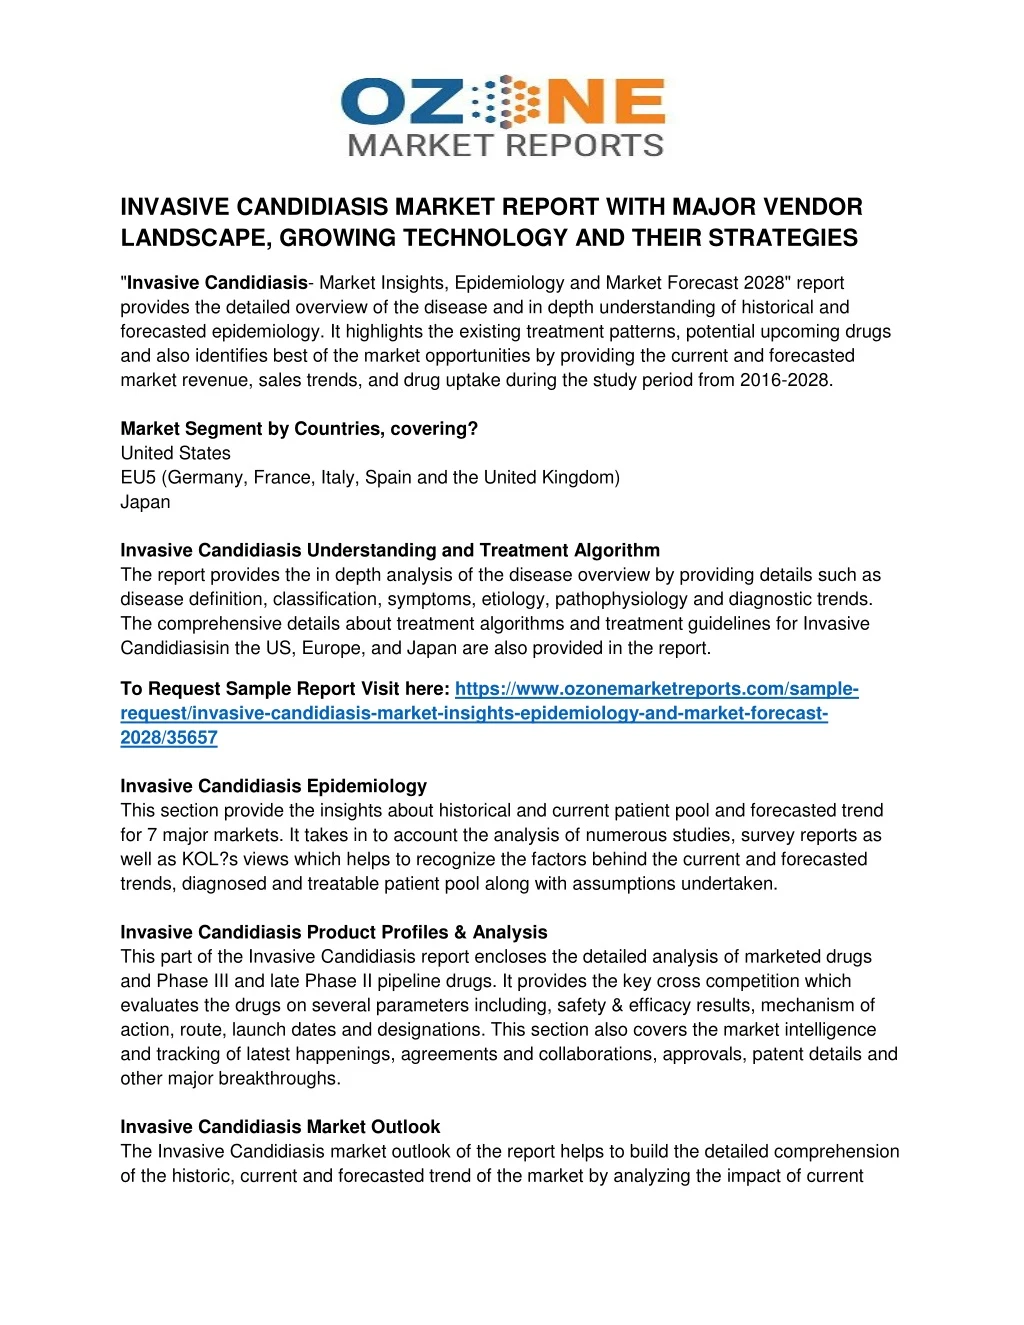 invasive candidiasis market report with major